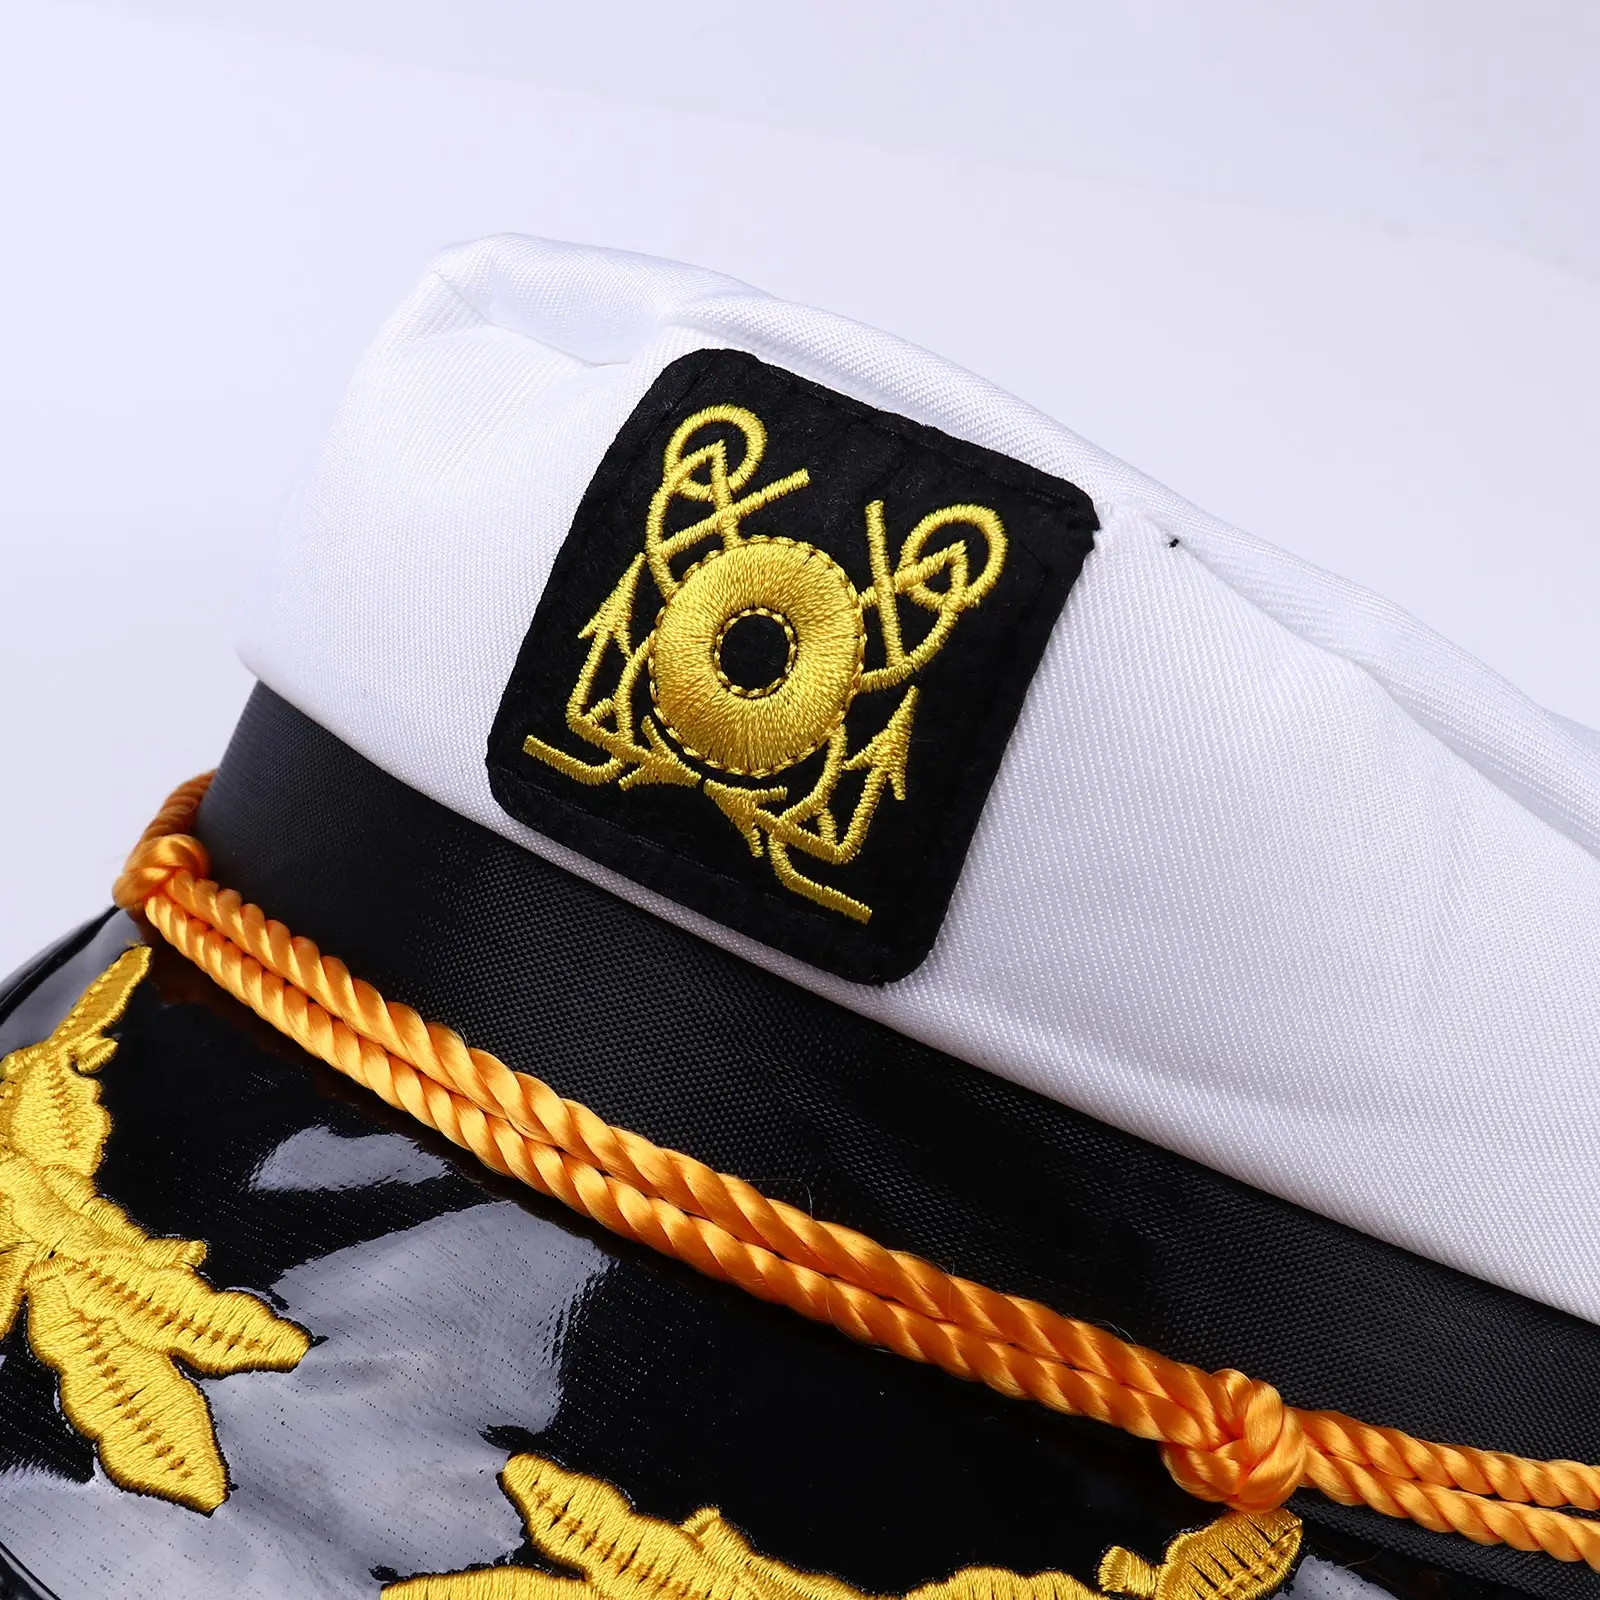 https://ae01.alicdn.com/kf/Hfdd3c96a03994302b0d47738f283a413Z/Men-Yacht-Captain-Boating-Hat-Sailor-Cap-Aviator-Sunglasses-White-Gloves-Set-For-Hollowen-Party-Cosplay.jpg